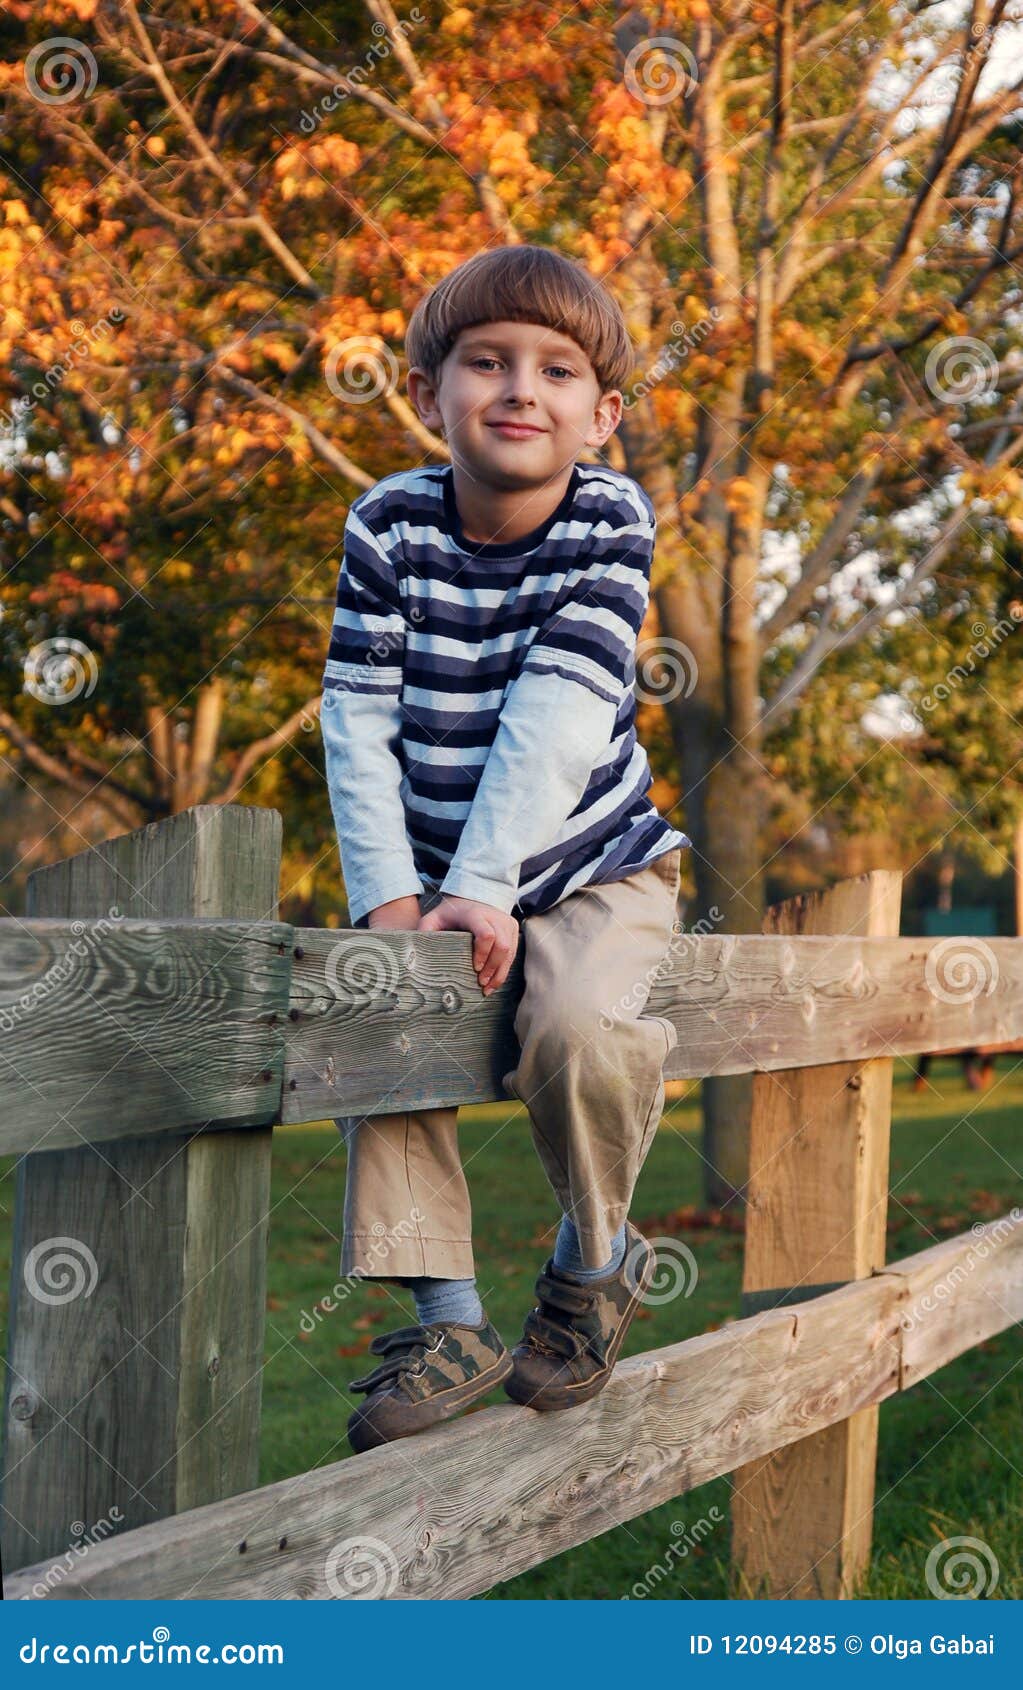 boy straddling on the fence